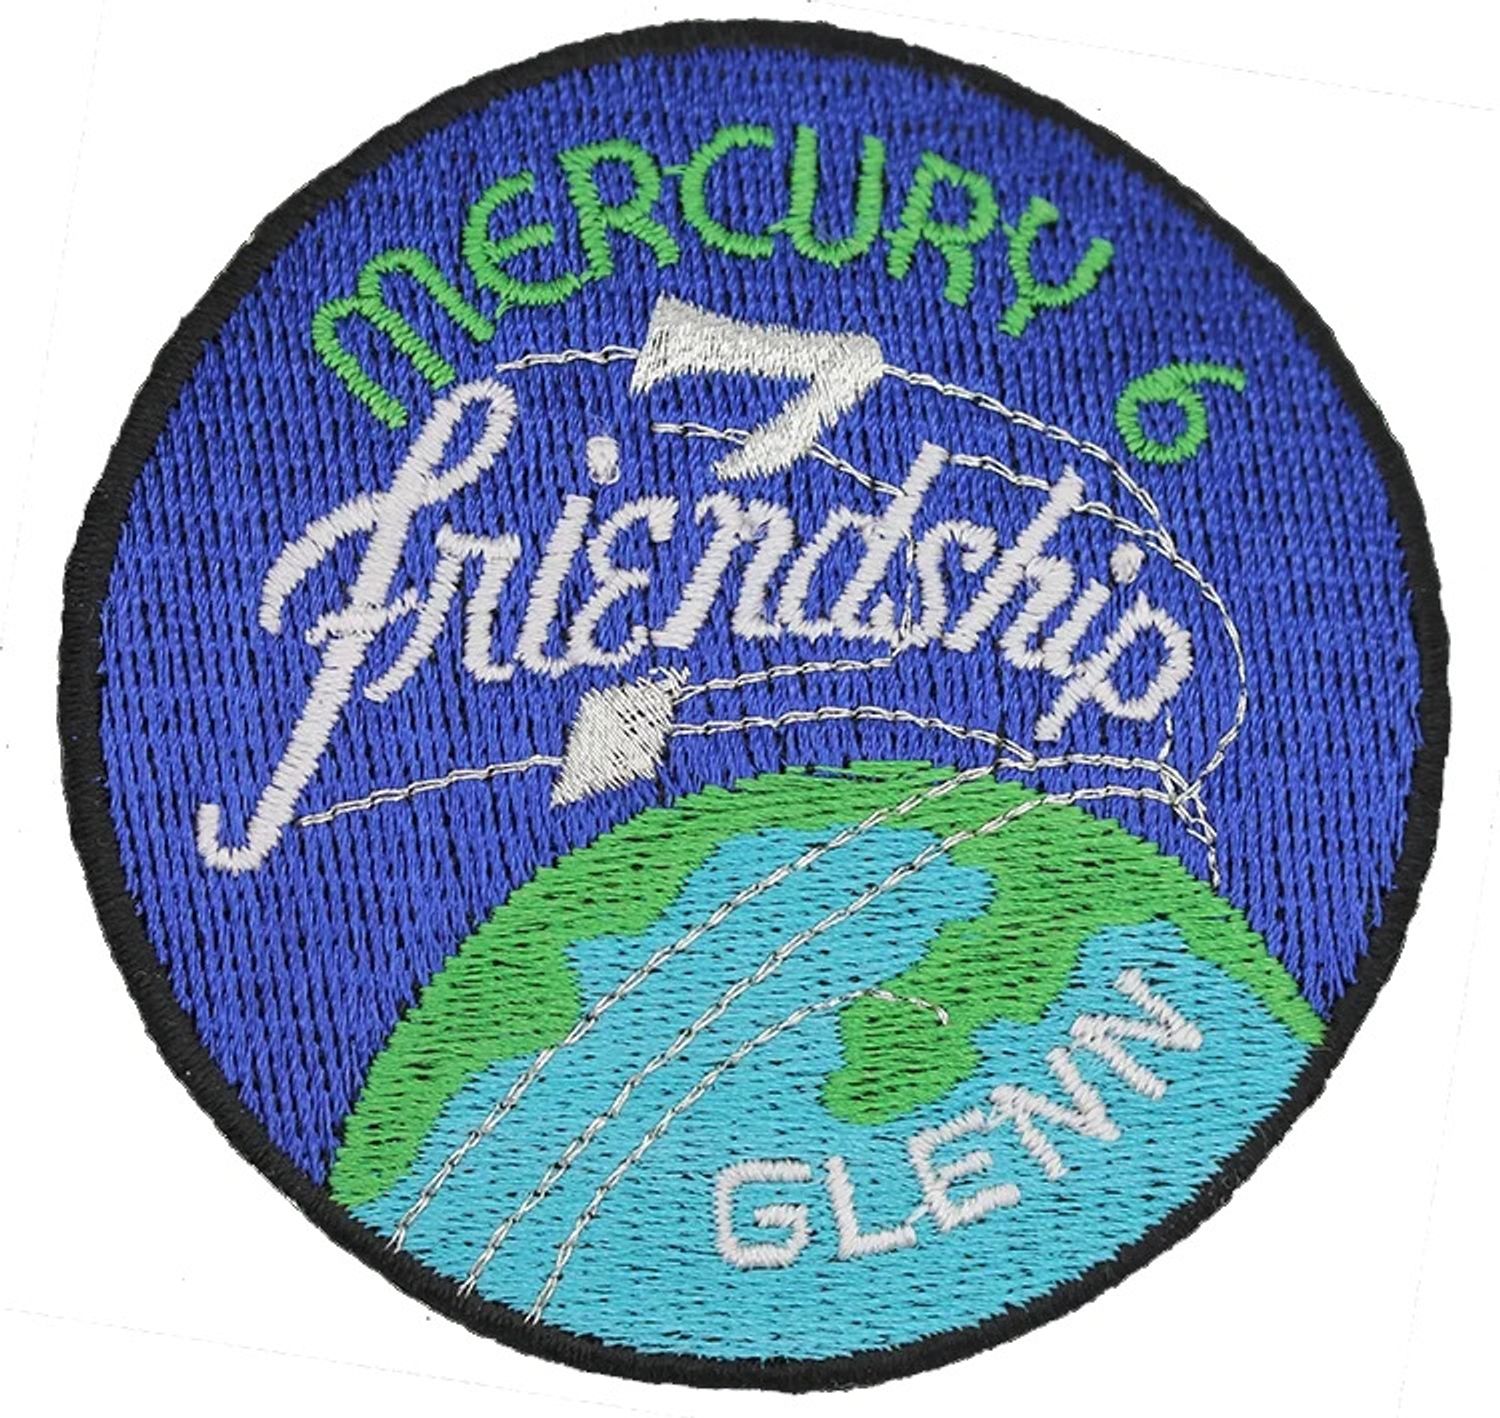 Mercury-Atlas 6 (Friendship 7)